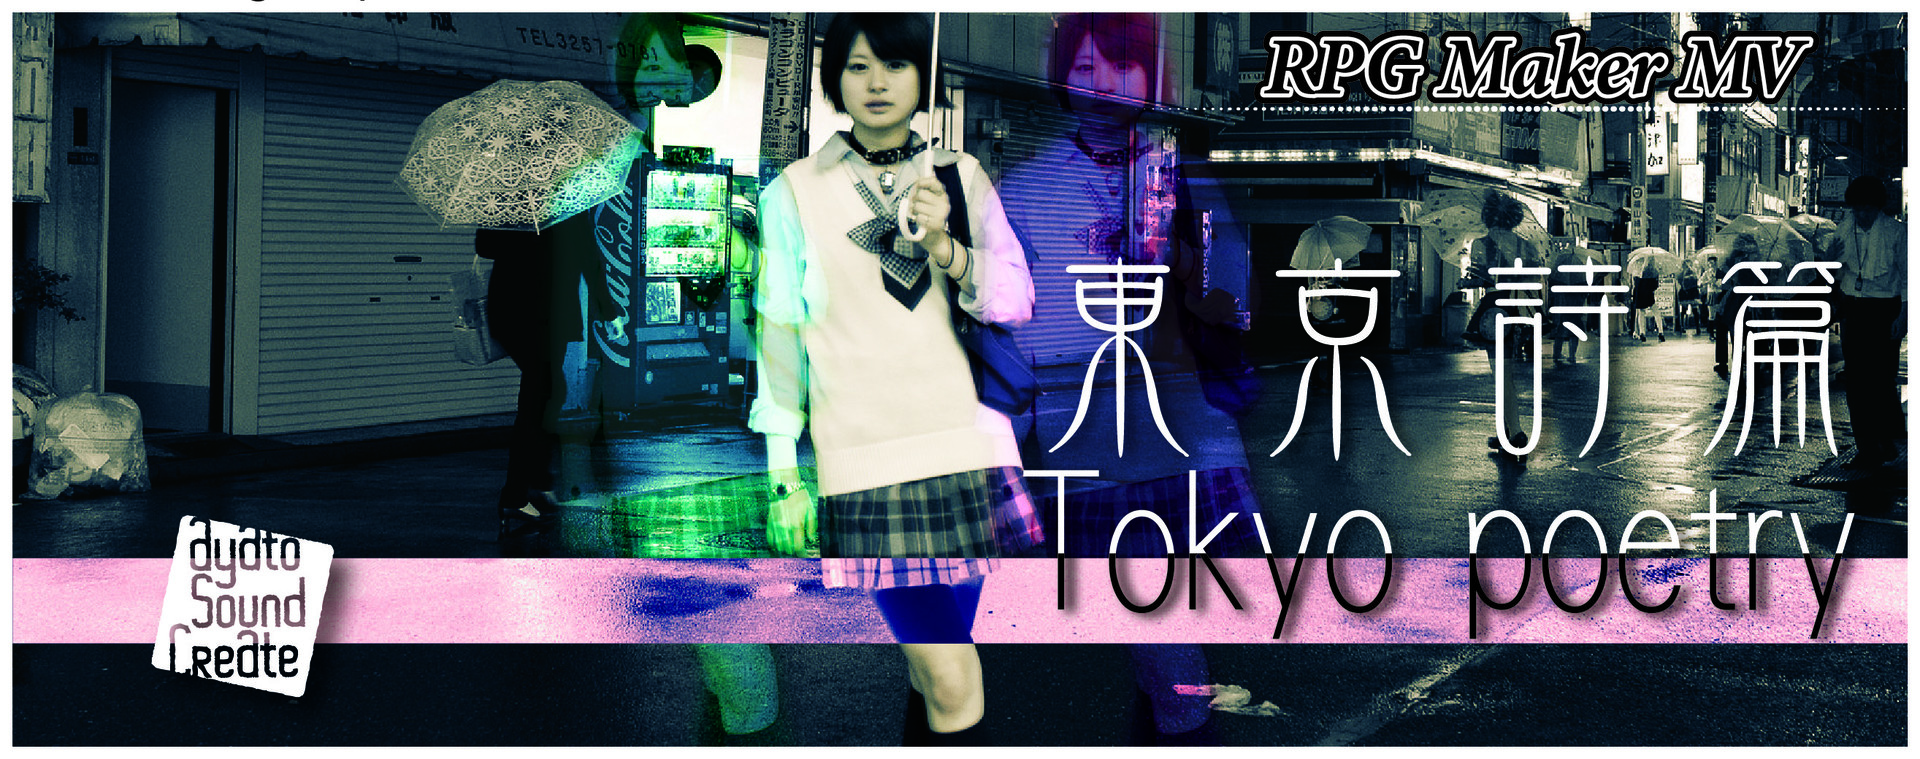 RPG Maker MV - Tokyo Poetry Featured Screenshot #1